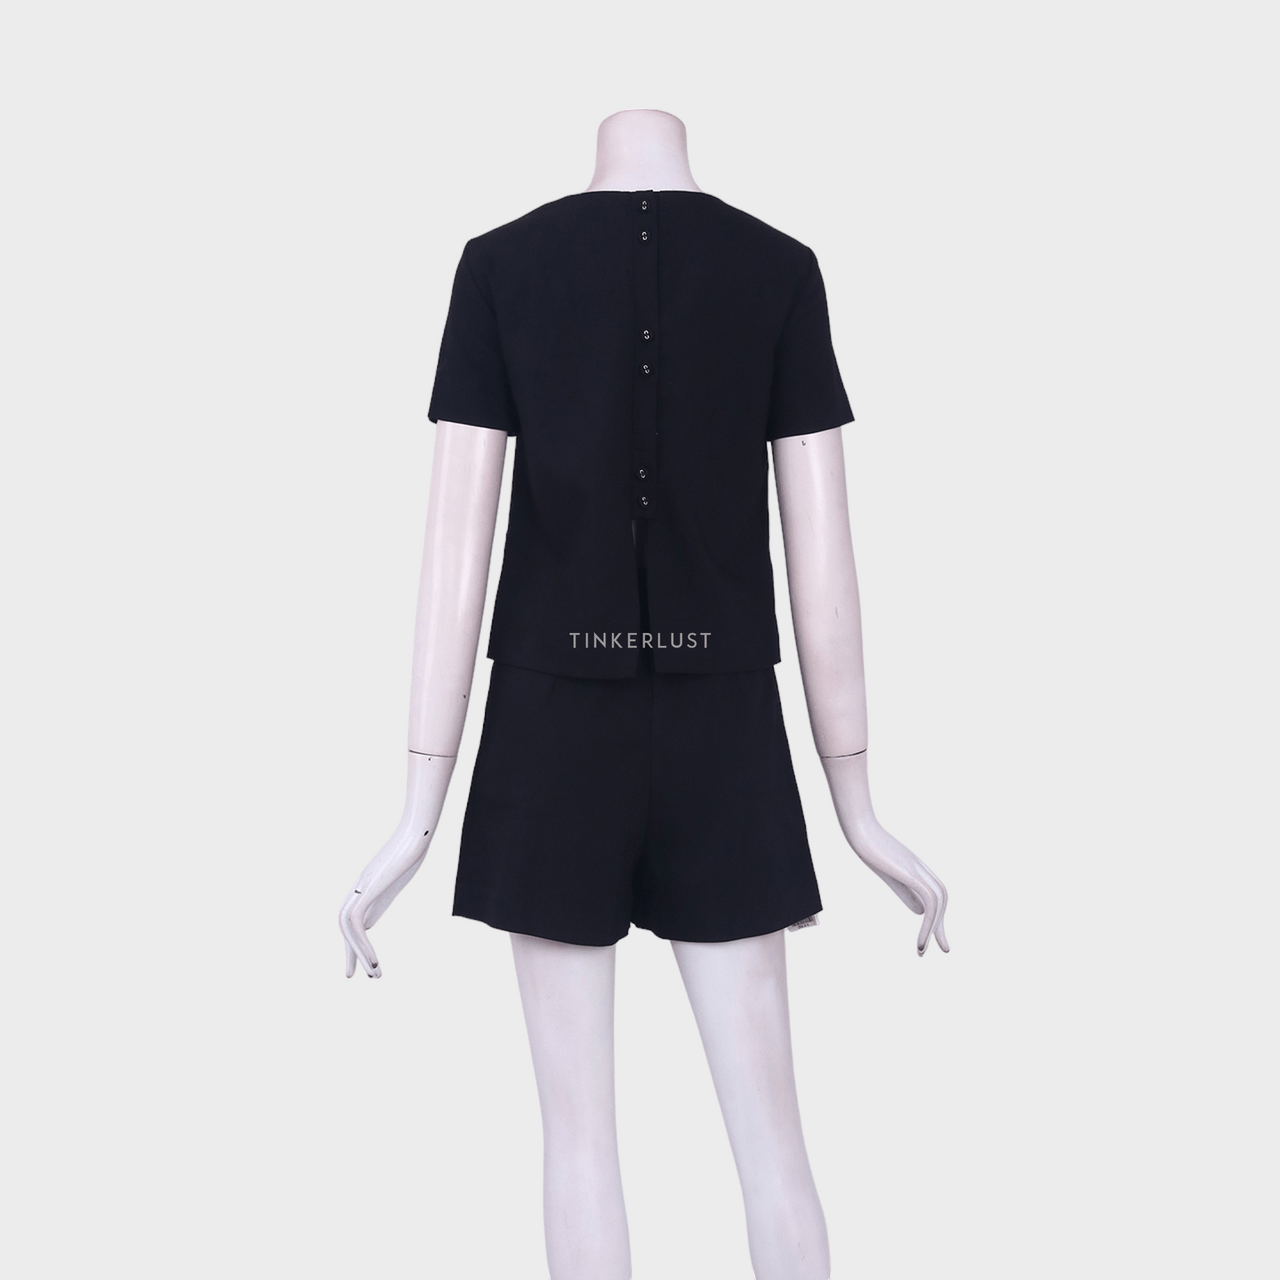 Zara Black Jumpsuit